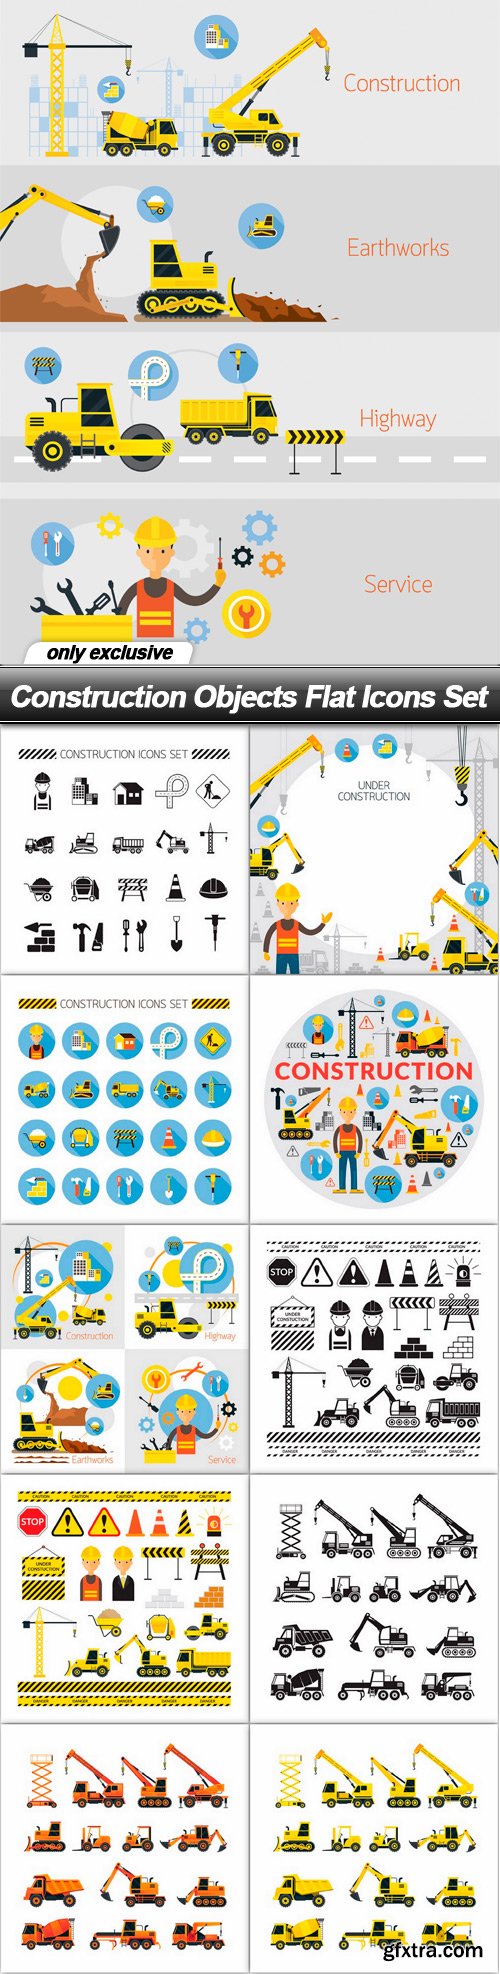 Construction Objects Flat Icons Set - 11 EPS